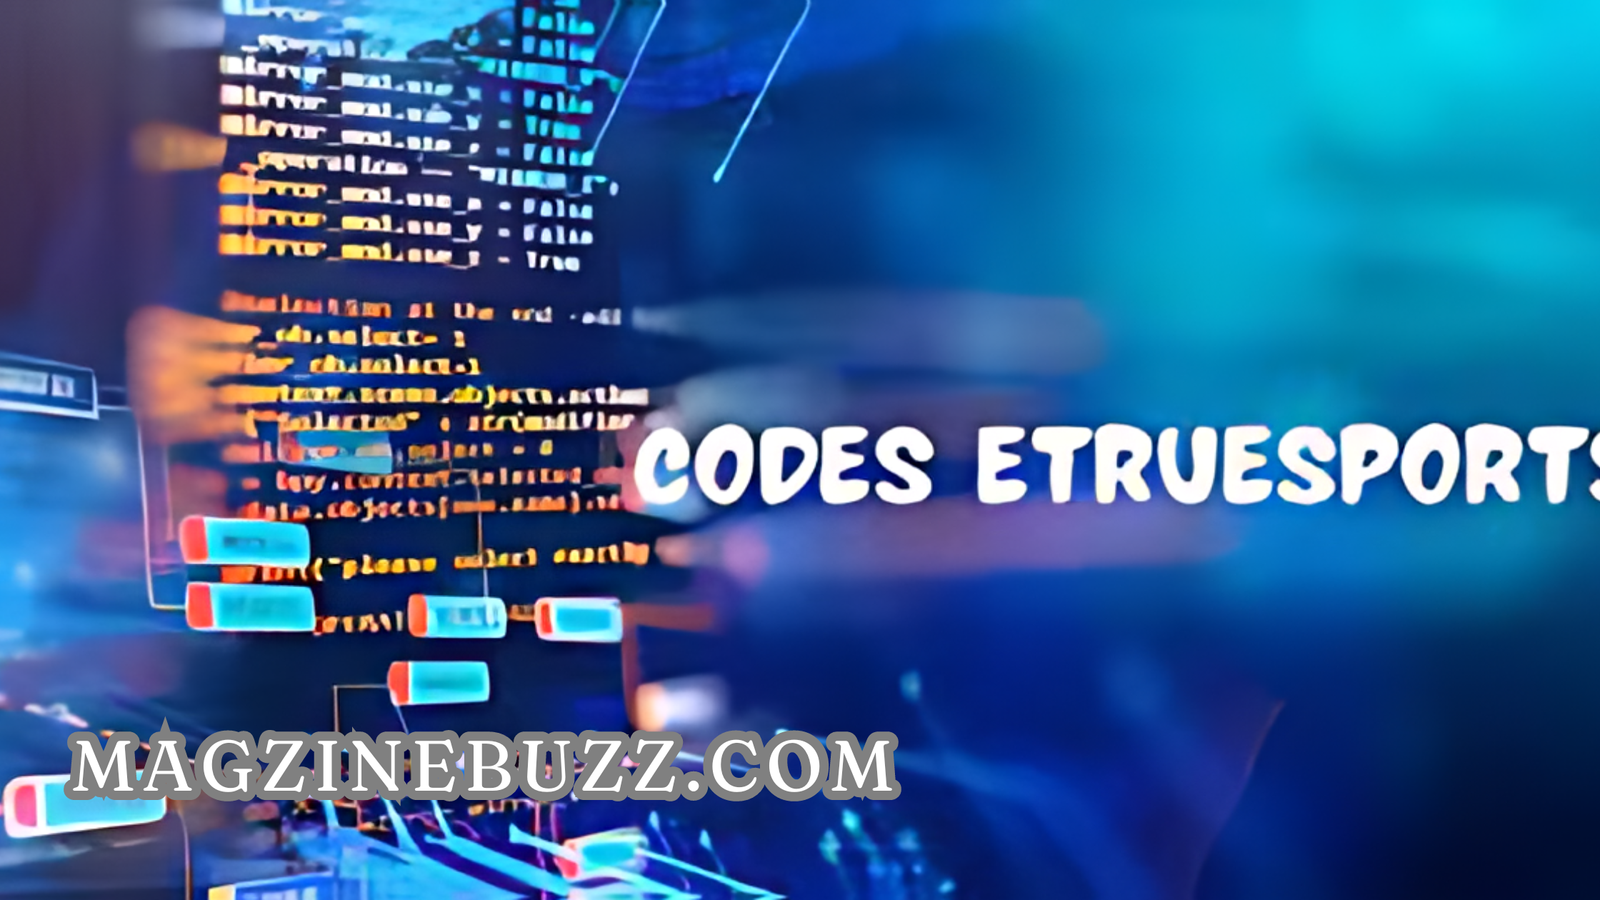 eTrueSports Codes